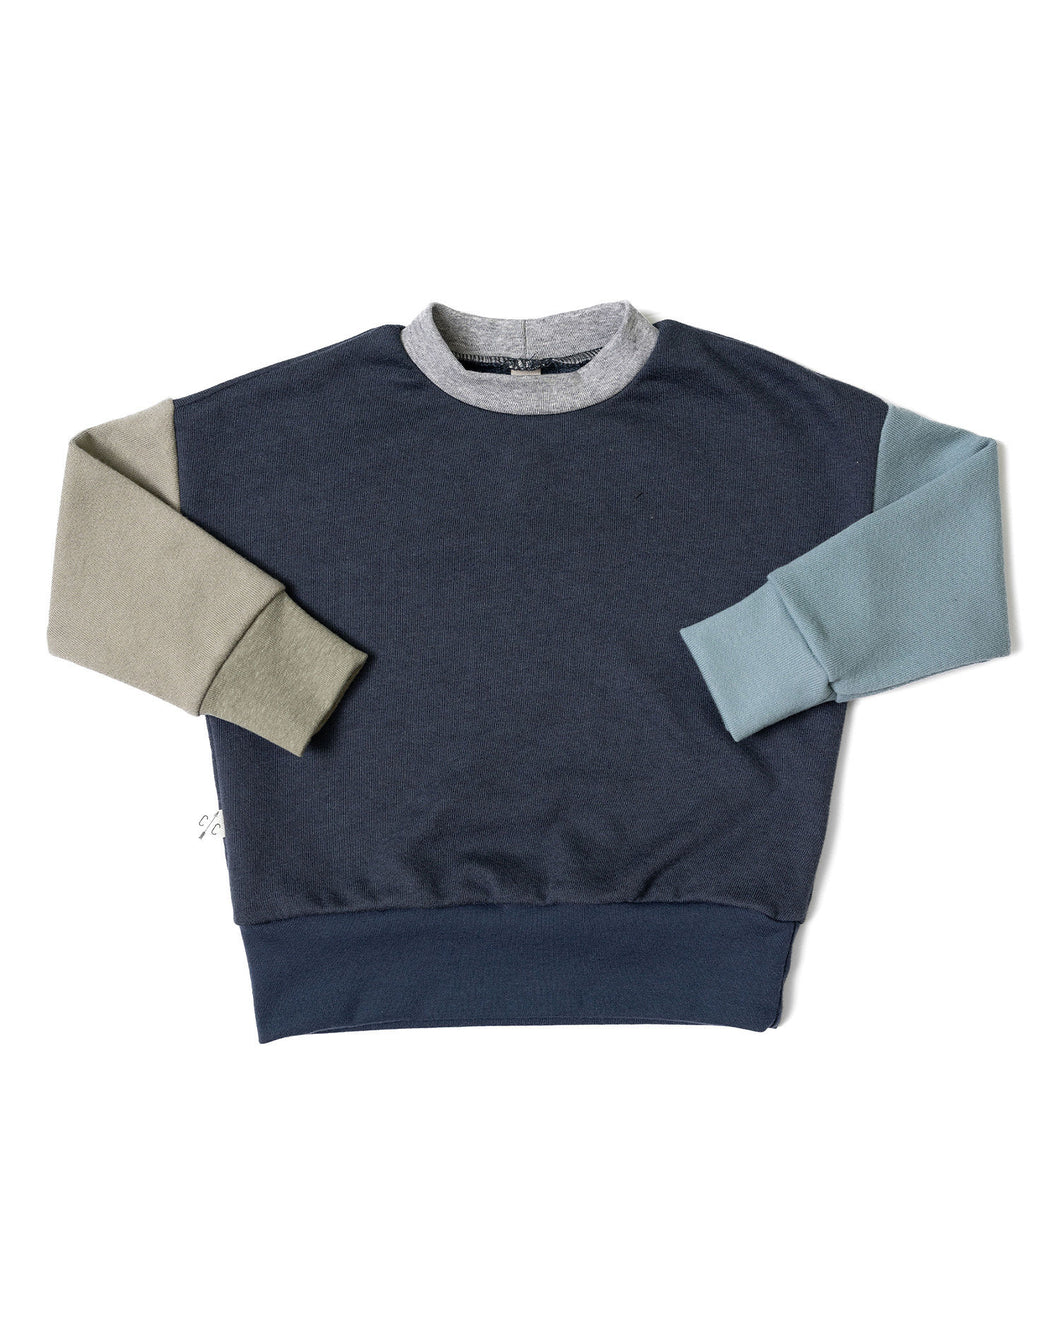 boxy sweatshirt - collegiate blue and pebble